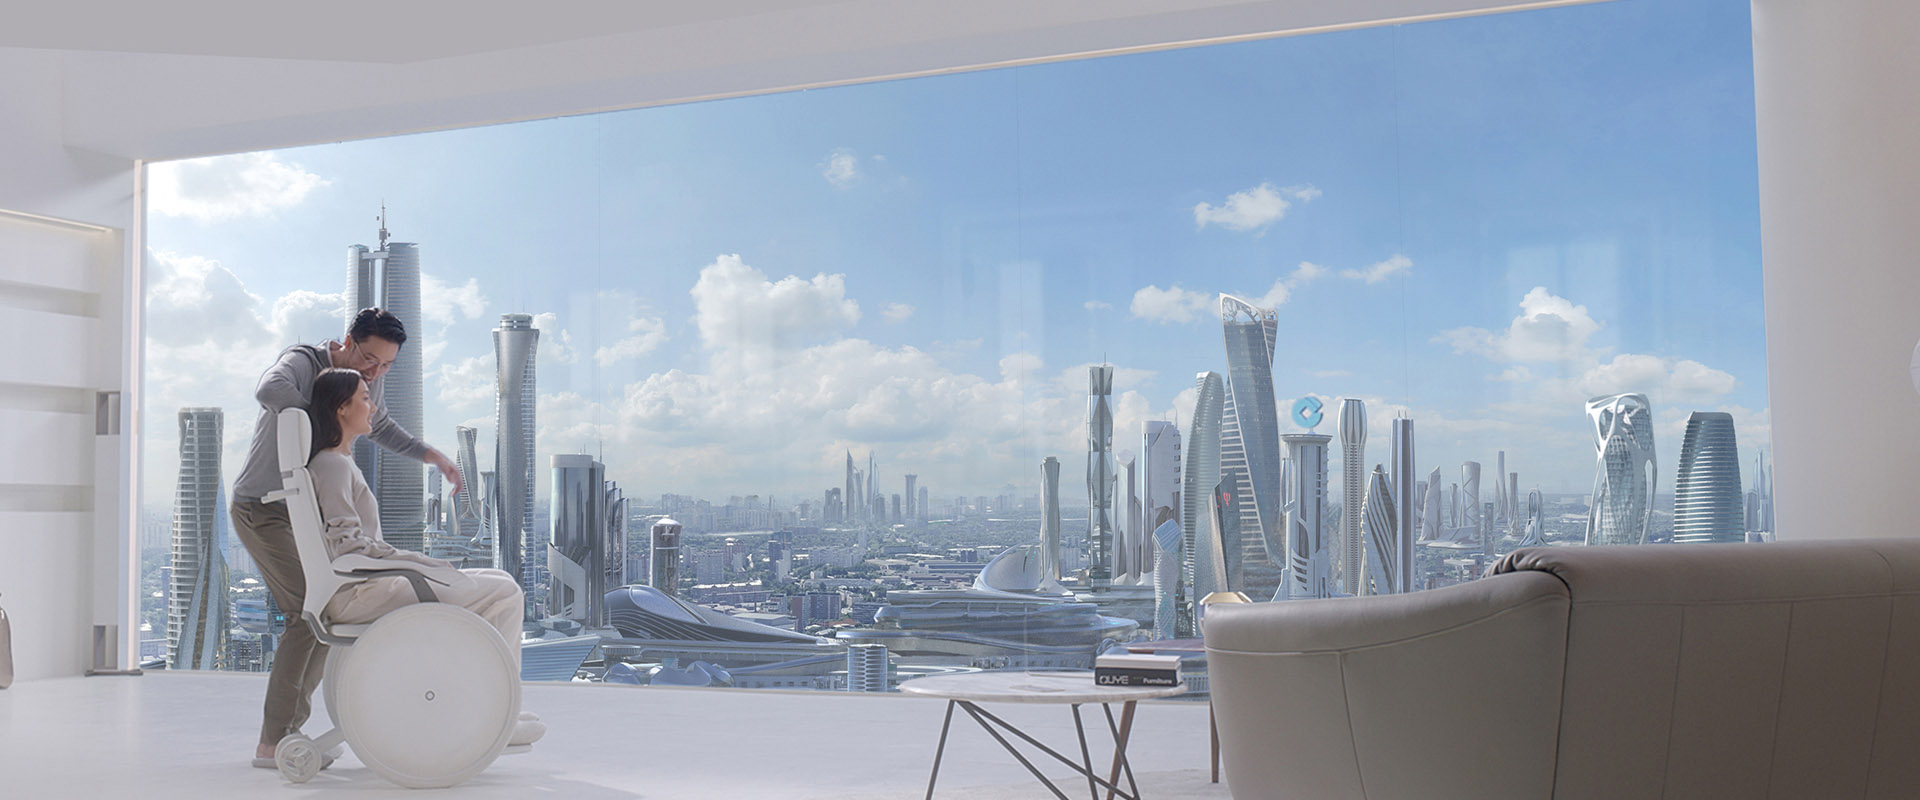 VFX environment of future city window view.